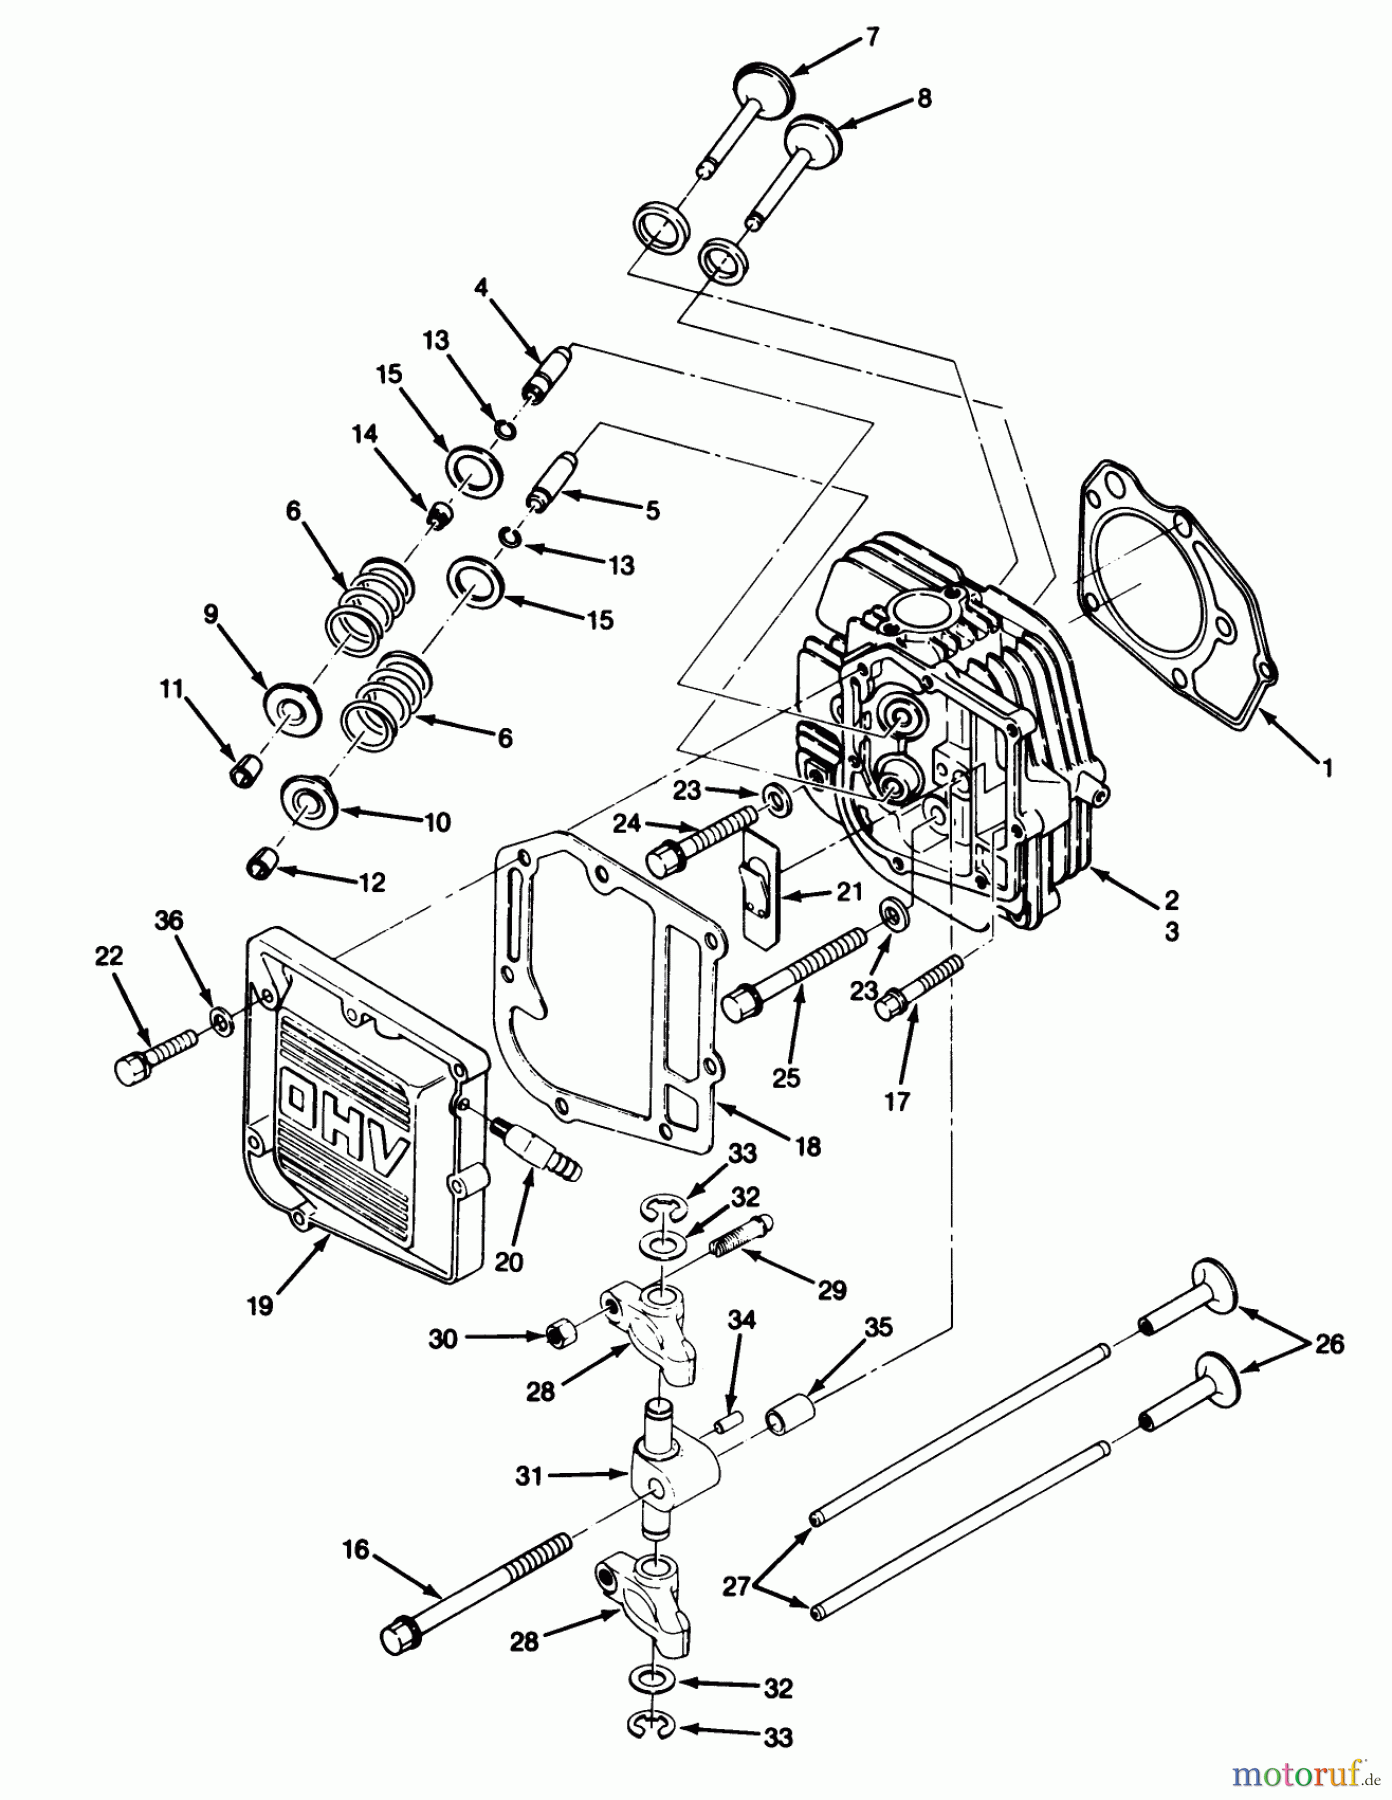  Toro Neu Mowers, Lawn & Garden Tractor Seite 1 32-10B501 (210-5) - Toro 210-5 Tractor, 1990 CYLINDER HEAD AND VALVES